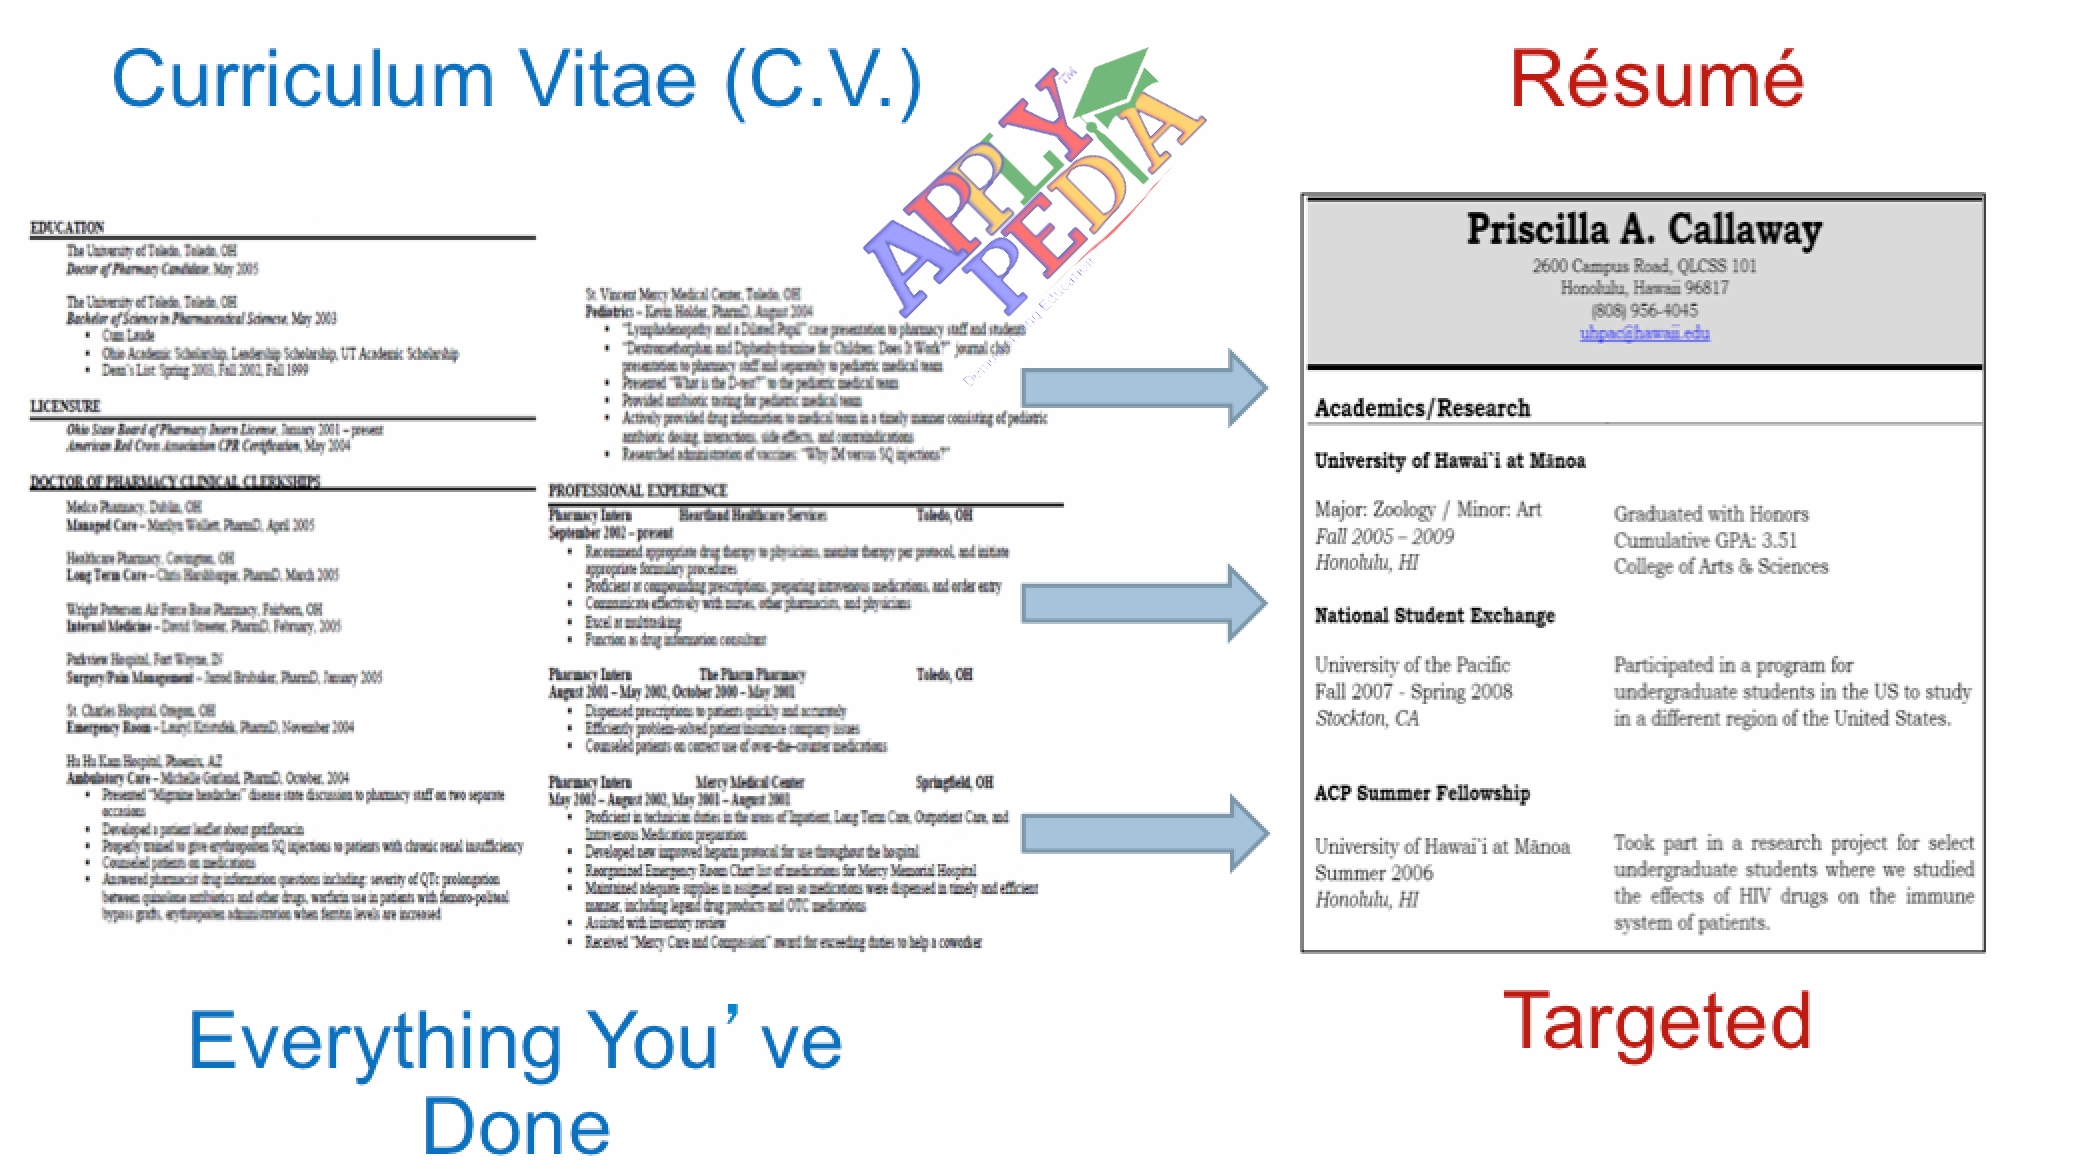 Curriculum Vitae یا CV سی.وی